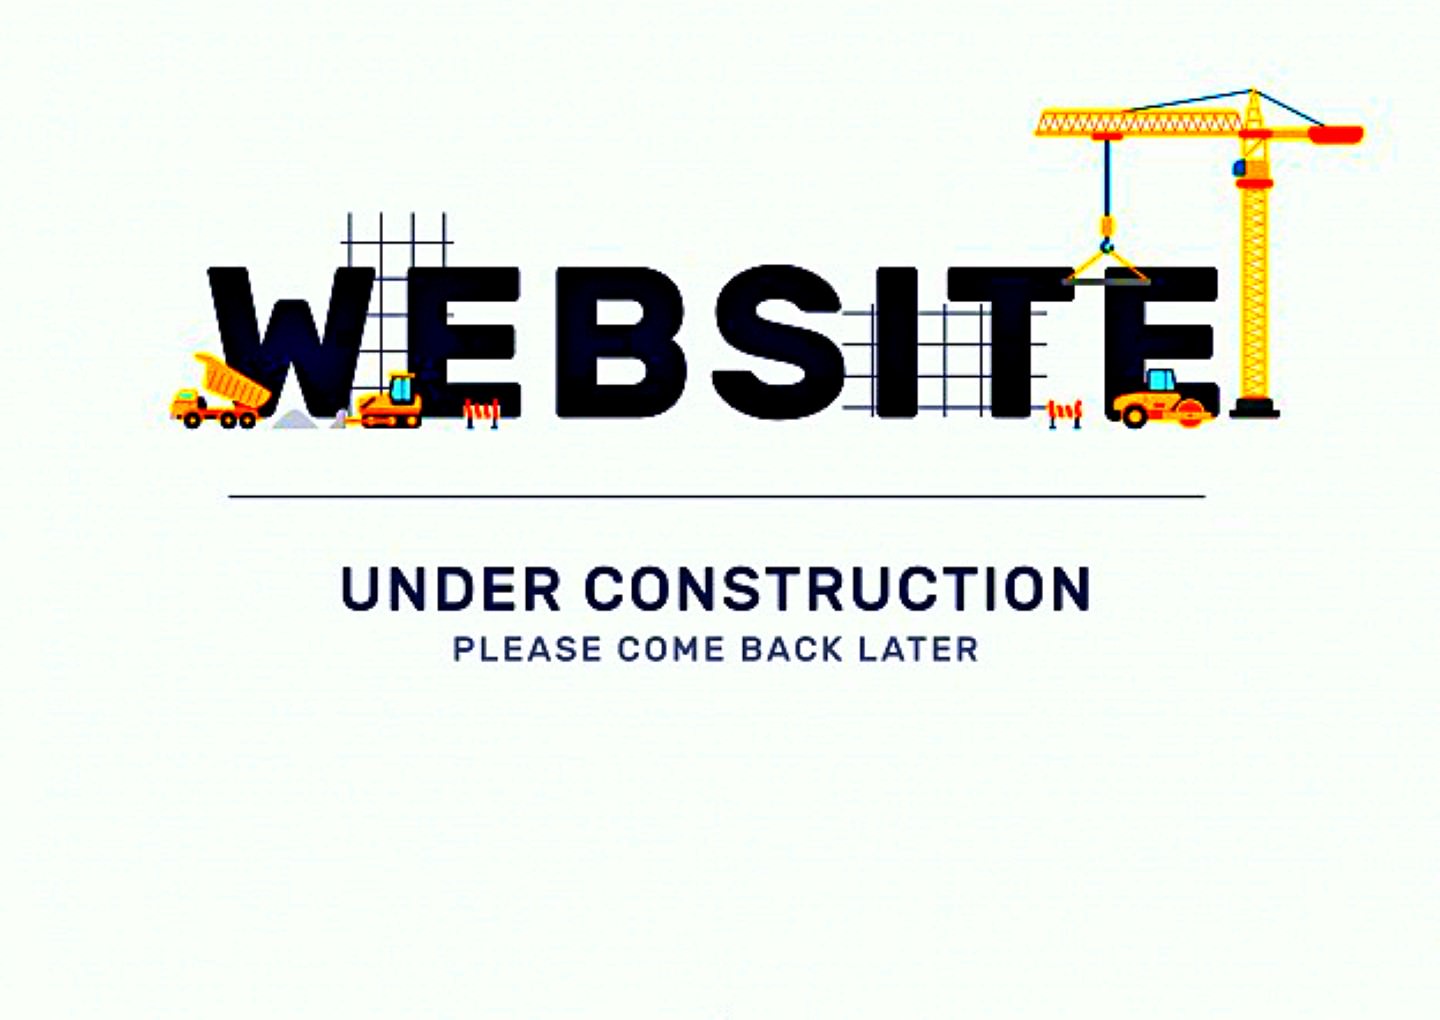 Webpage under contruction